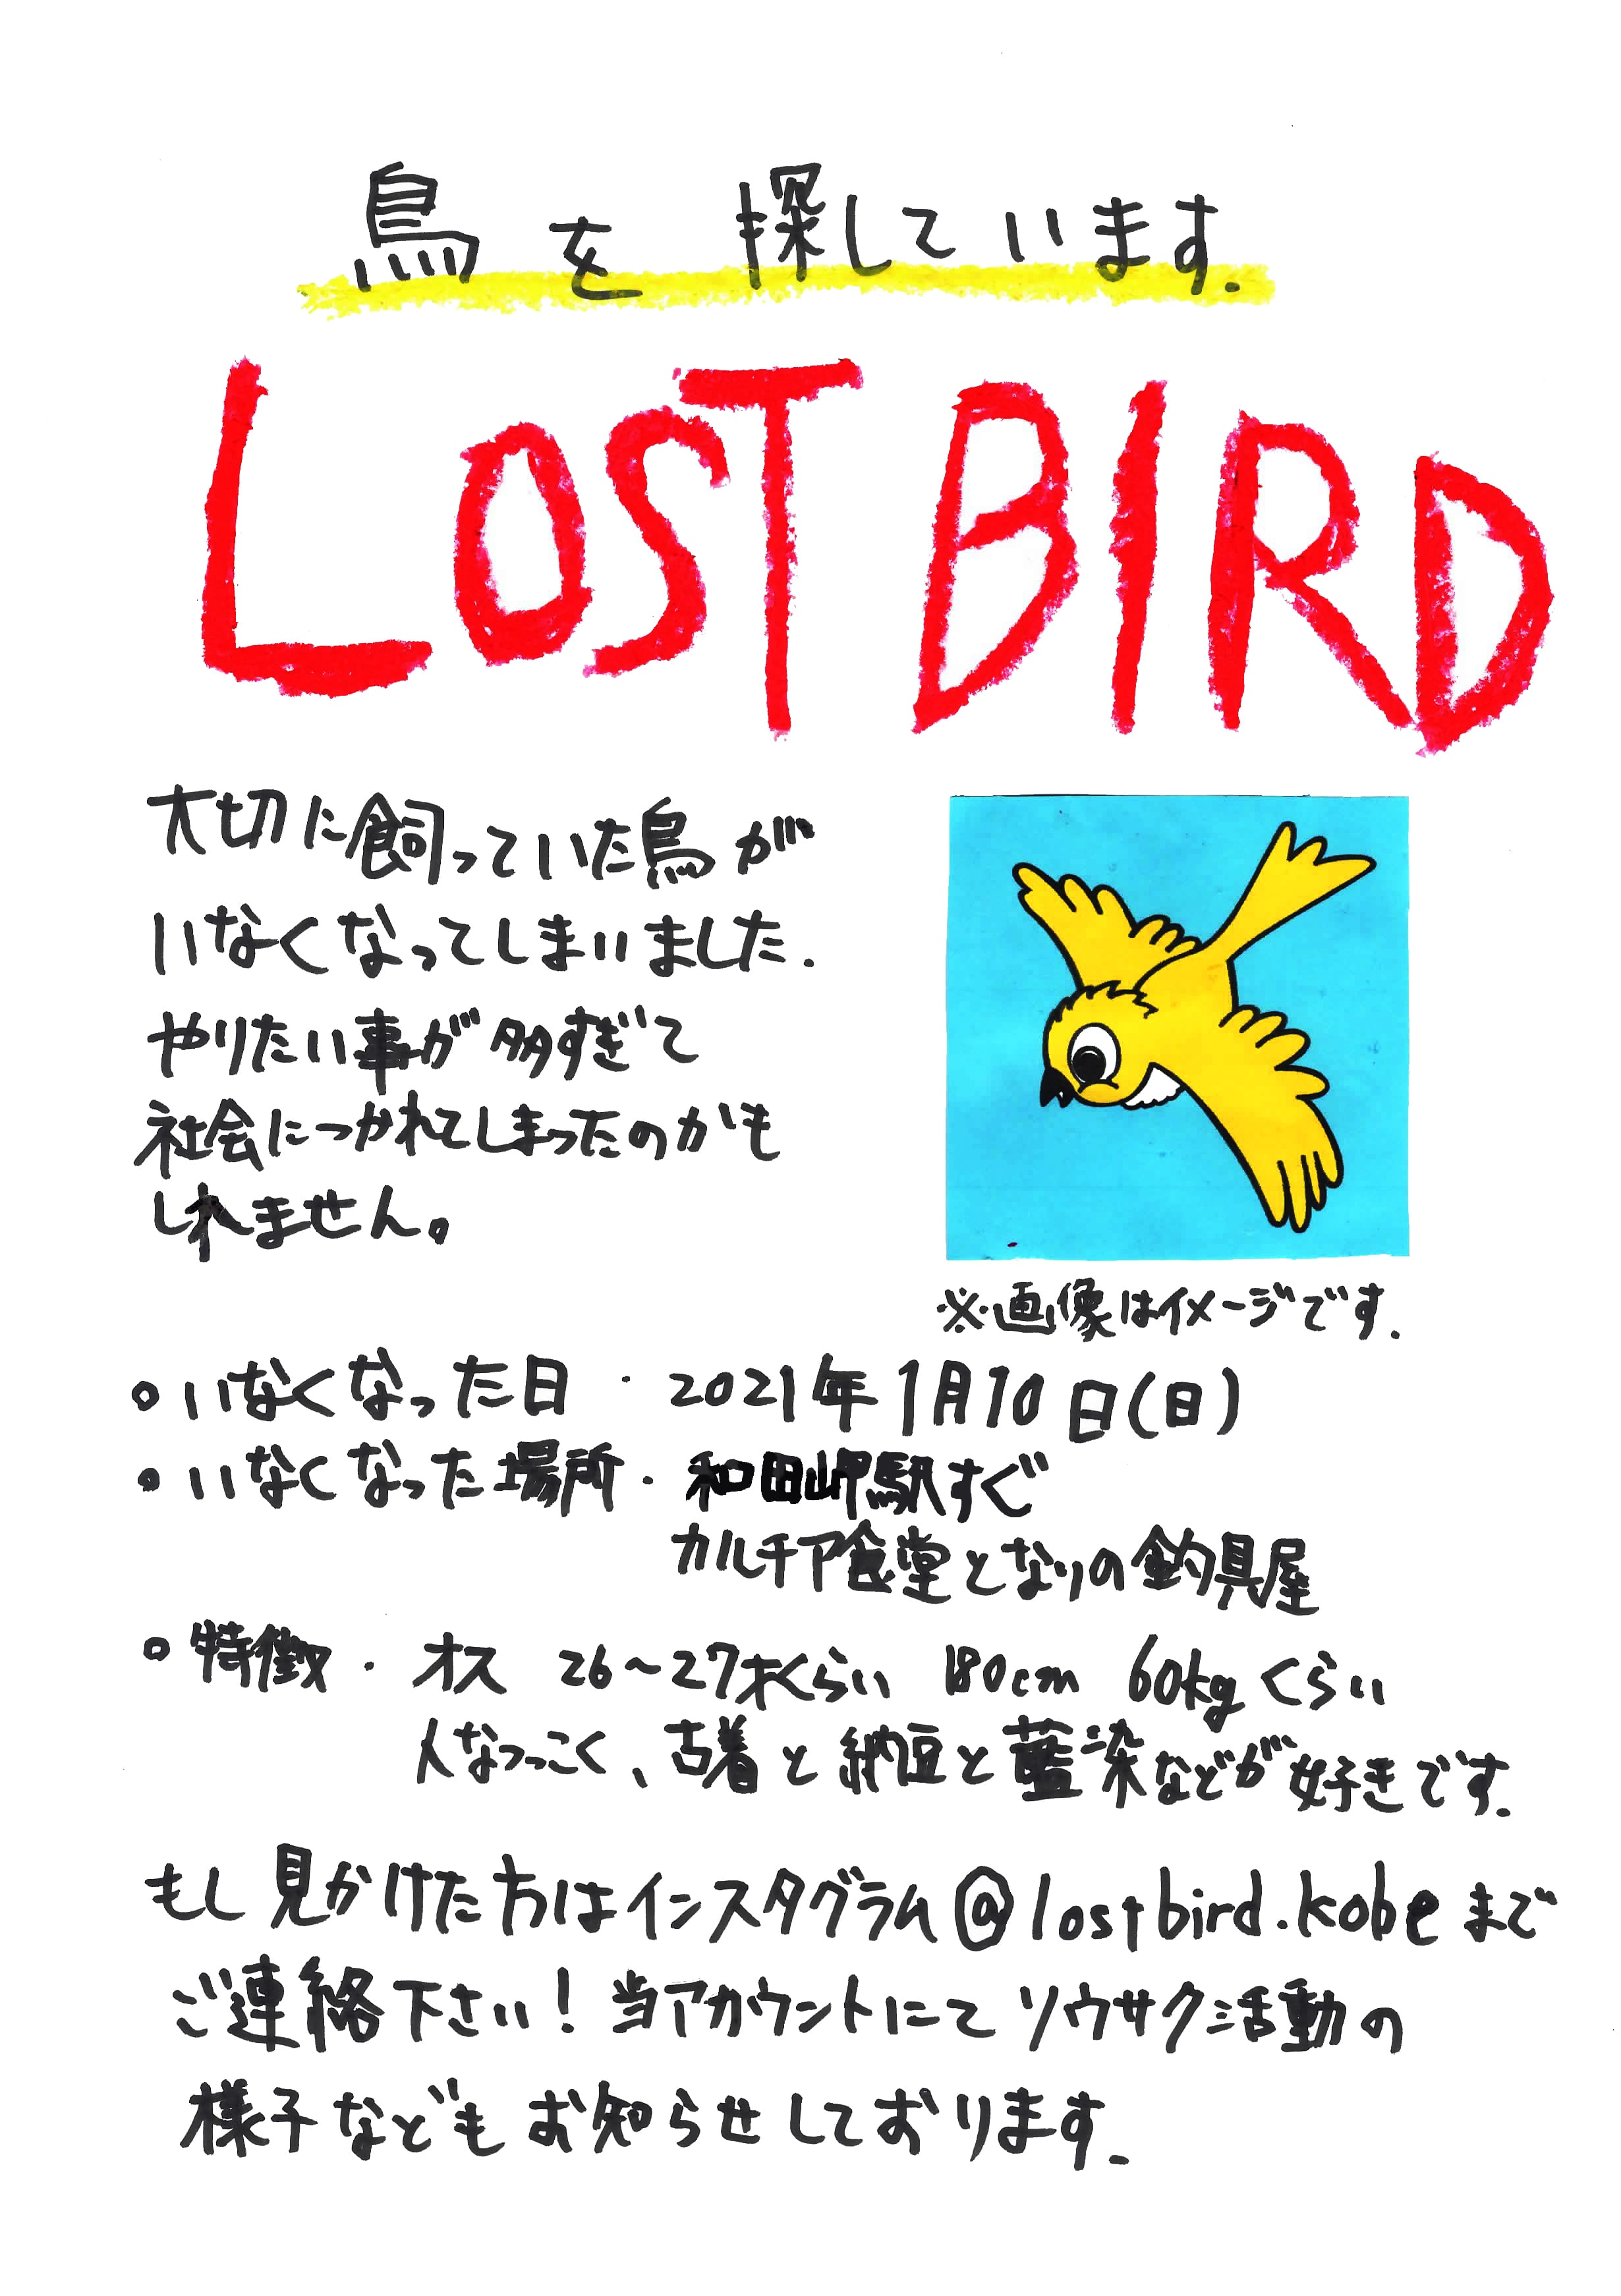 LOST BIRD